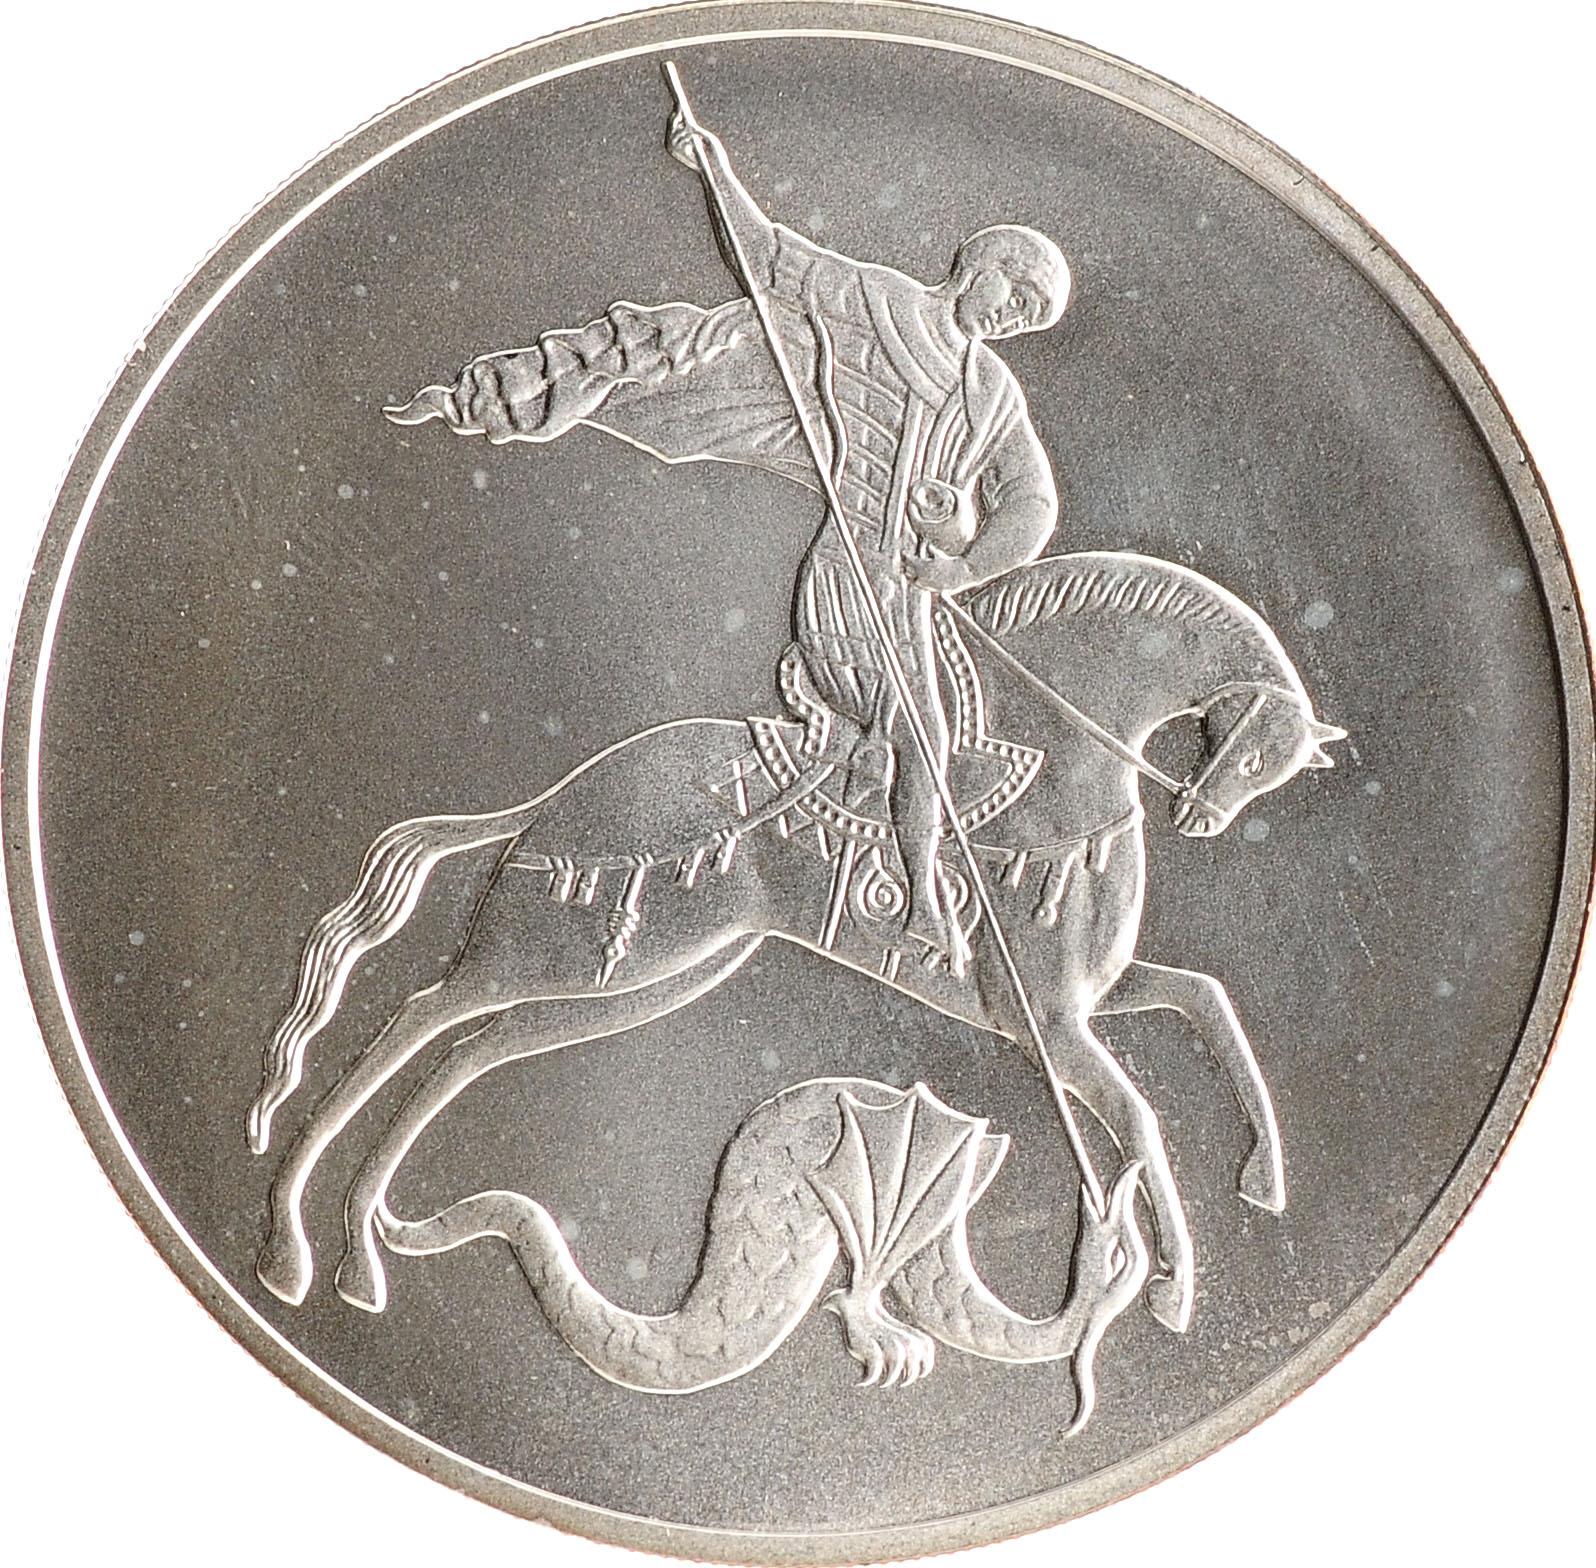 Монета серебряная победоносец купить. Победоносец 2009 серебро.